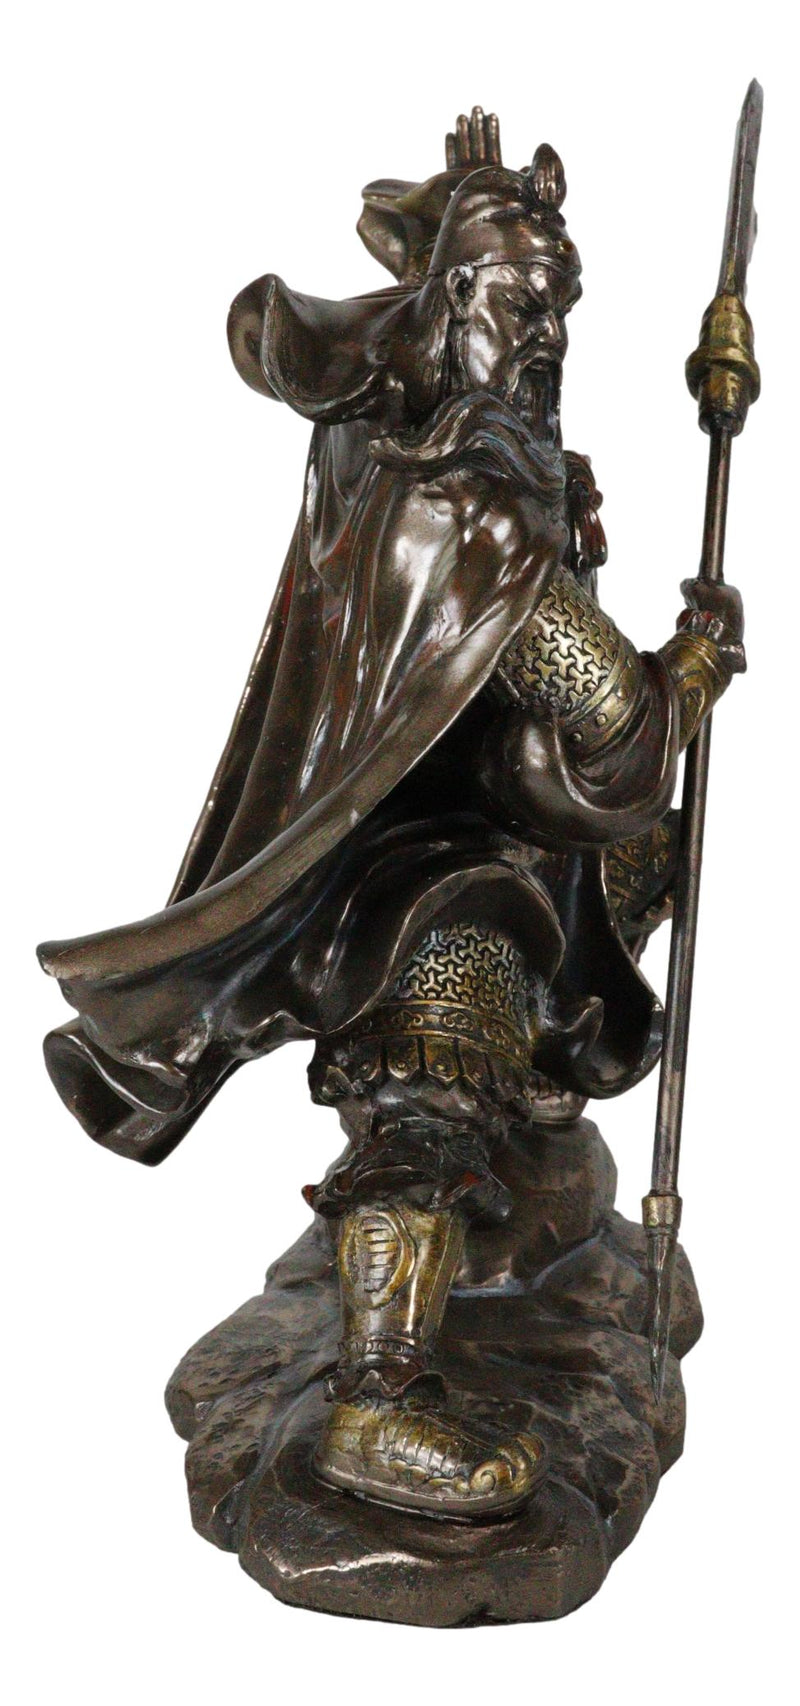 Ebros Chinese Historical General Guanyu Yunchang Shu Han Warlord Figurine Statue